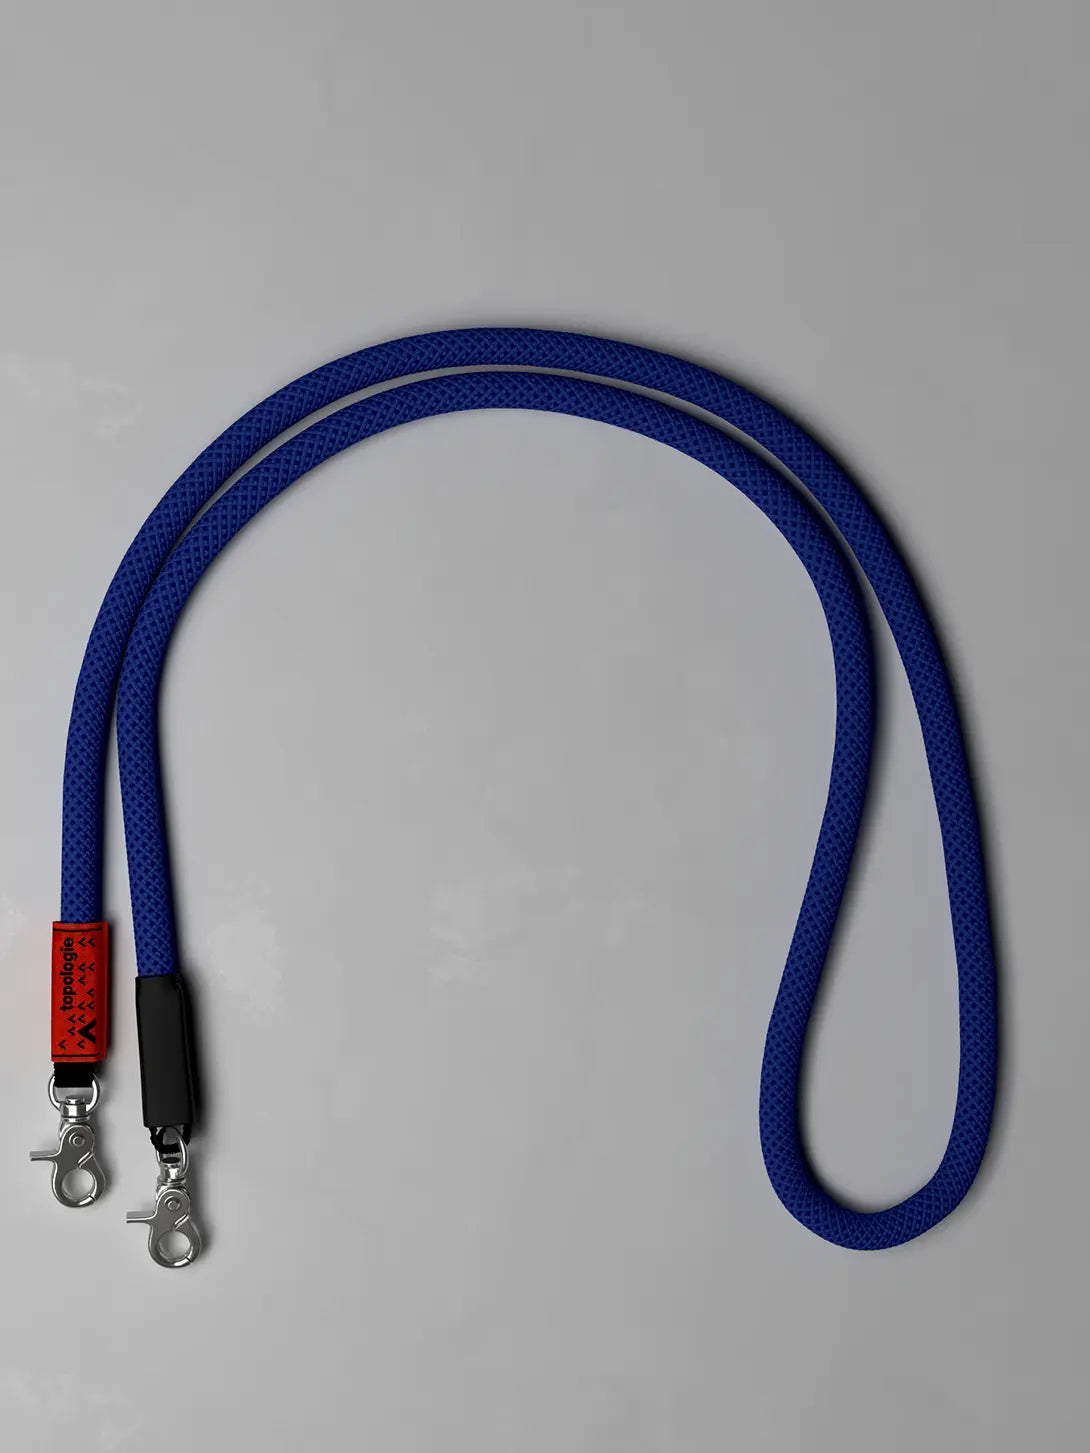 Future Blue Lattice Topologie Rope Strap 10mm